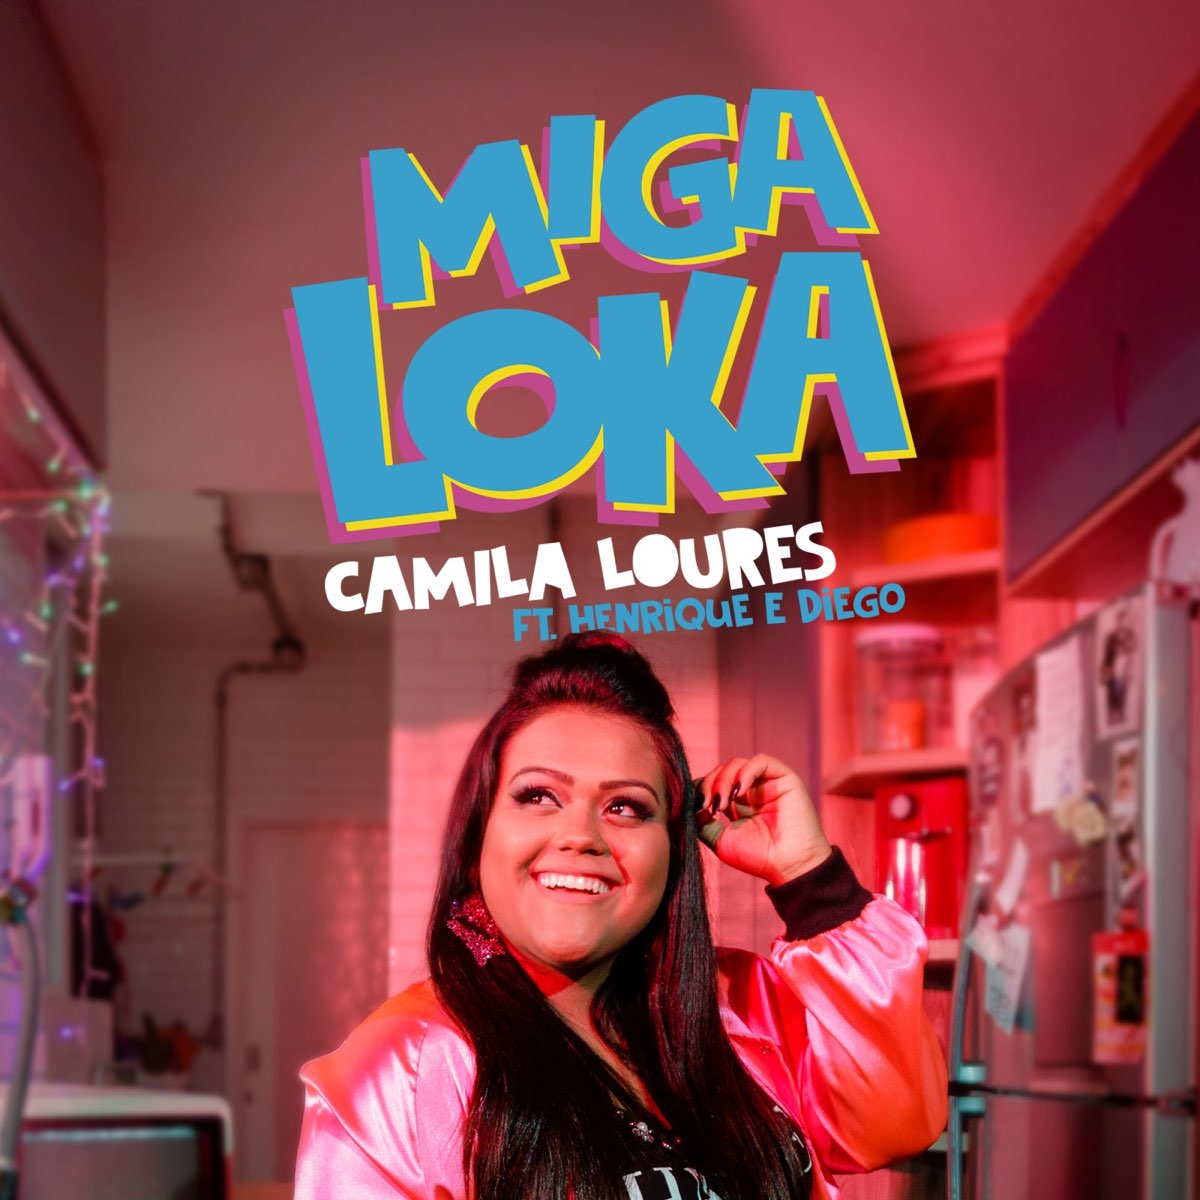 Camila Loures ft. featuring Henrique &amp; Diego Miga Loka cover artwork